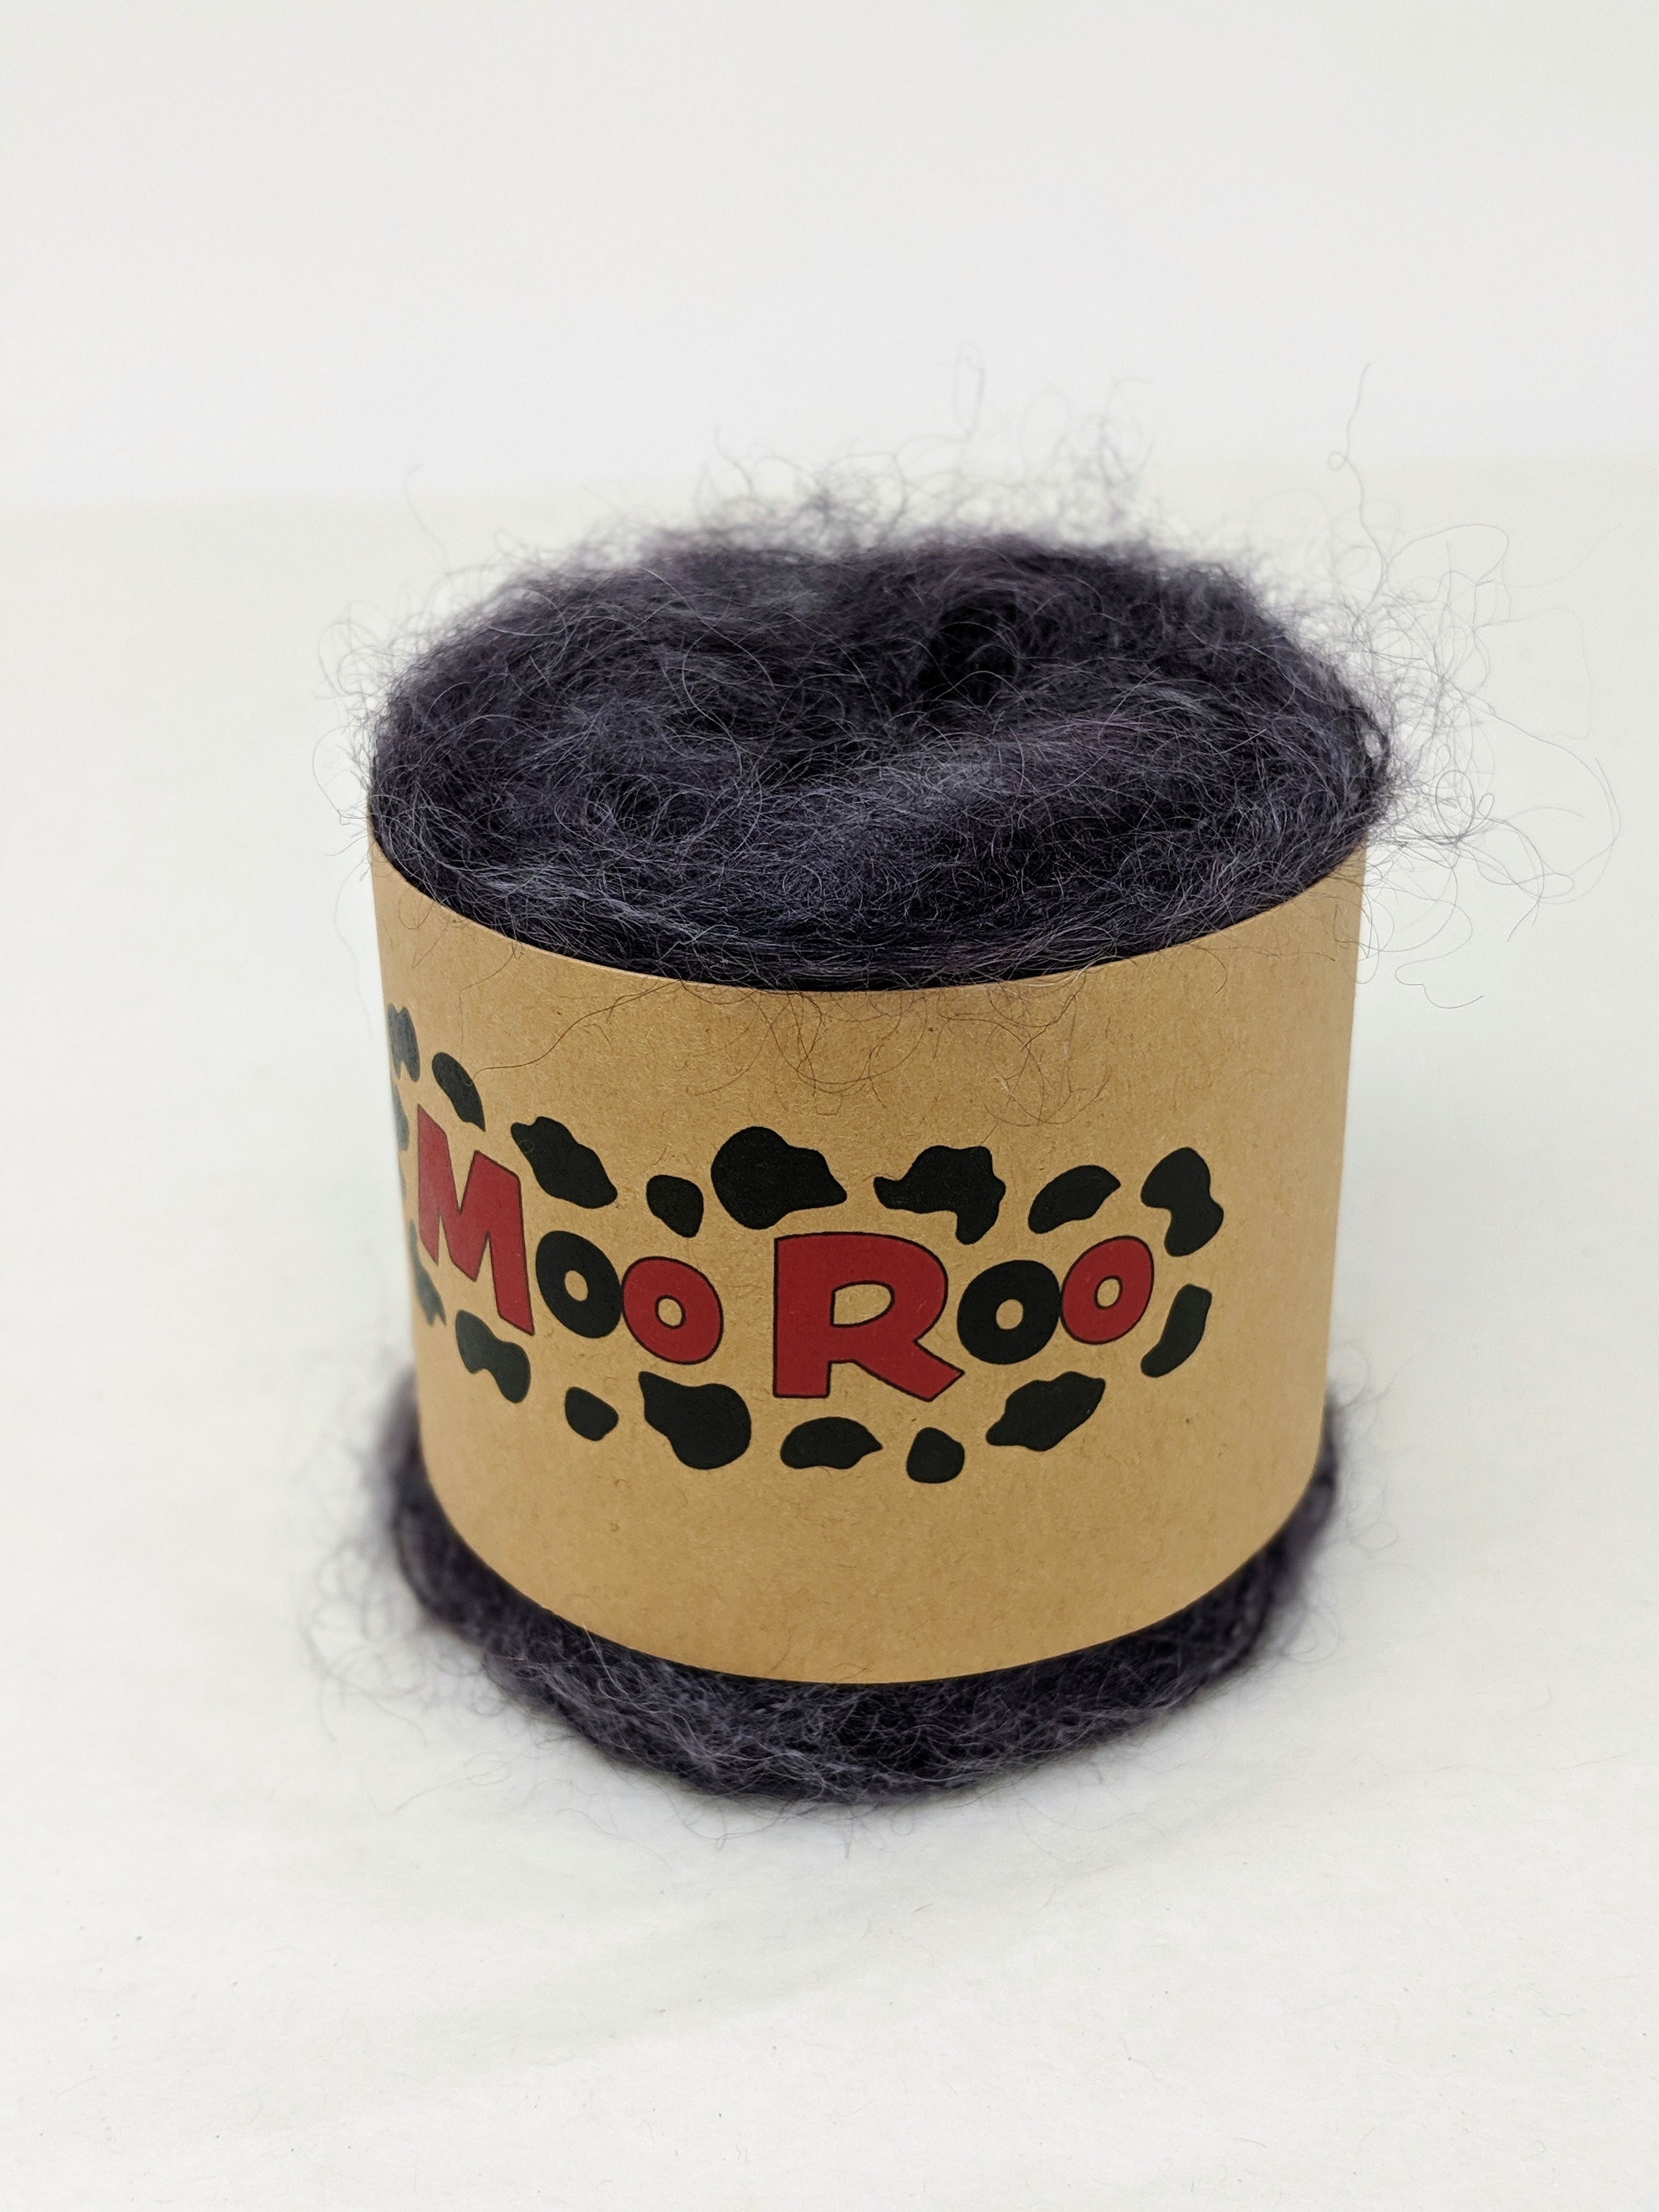 DK Weight Merino, Alpaca, Cotton Blend Yarn – Darn Good Yarn